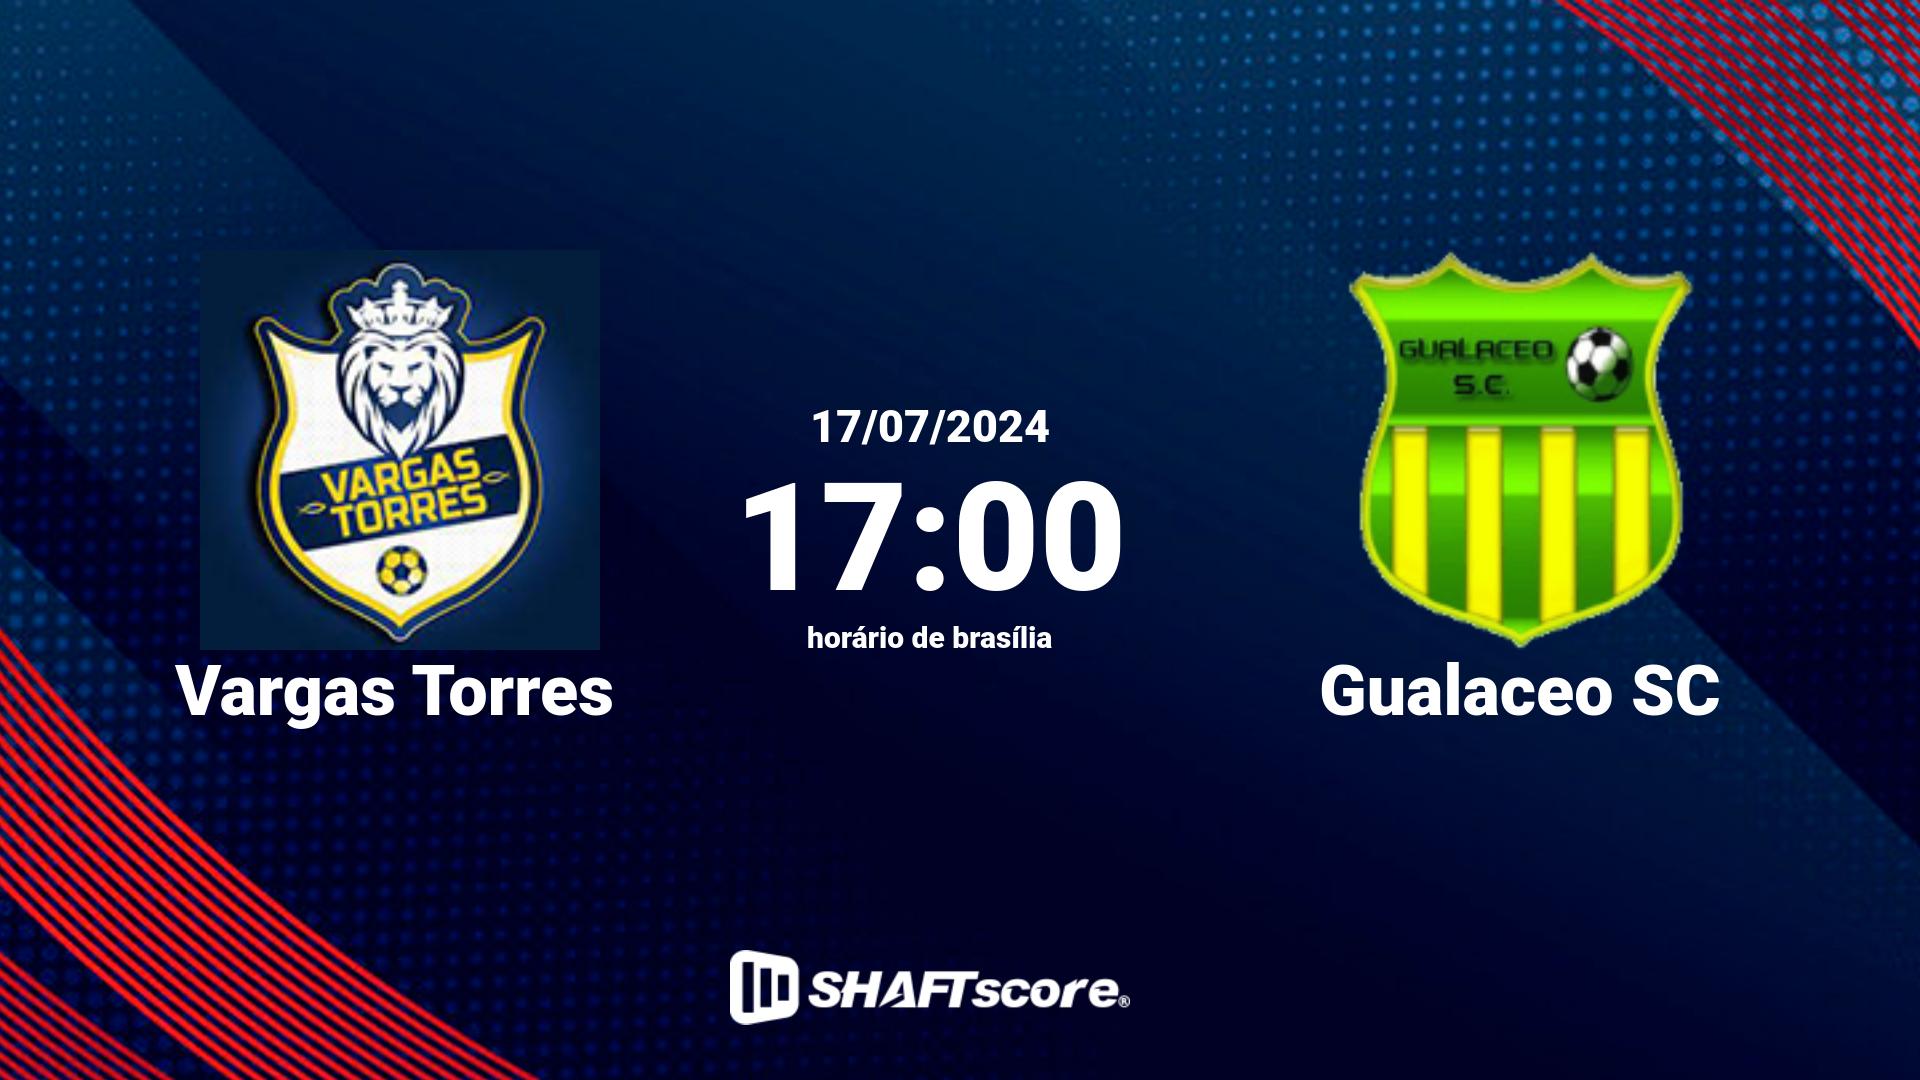 Estatísticas do jogo Vargas Torres vs Gualaceo SC 17.07 17:00